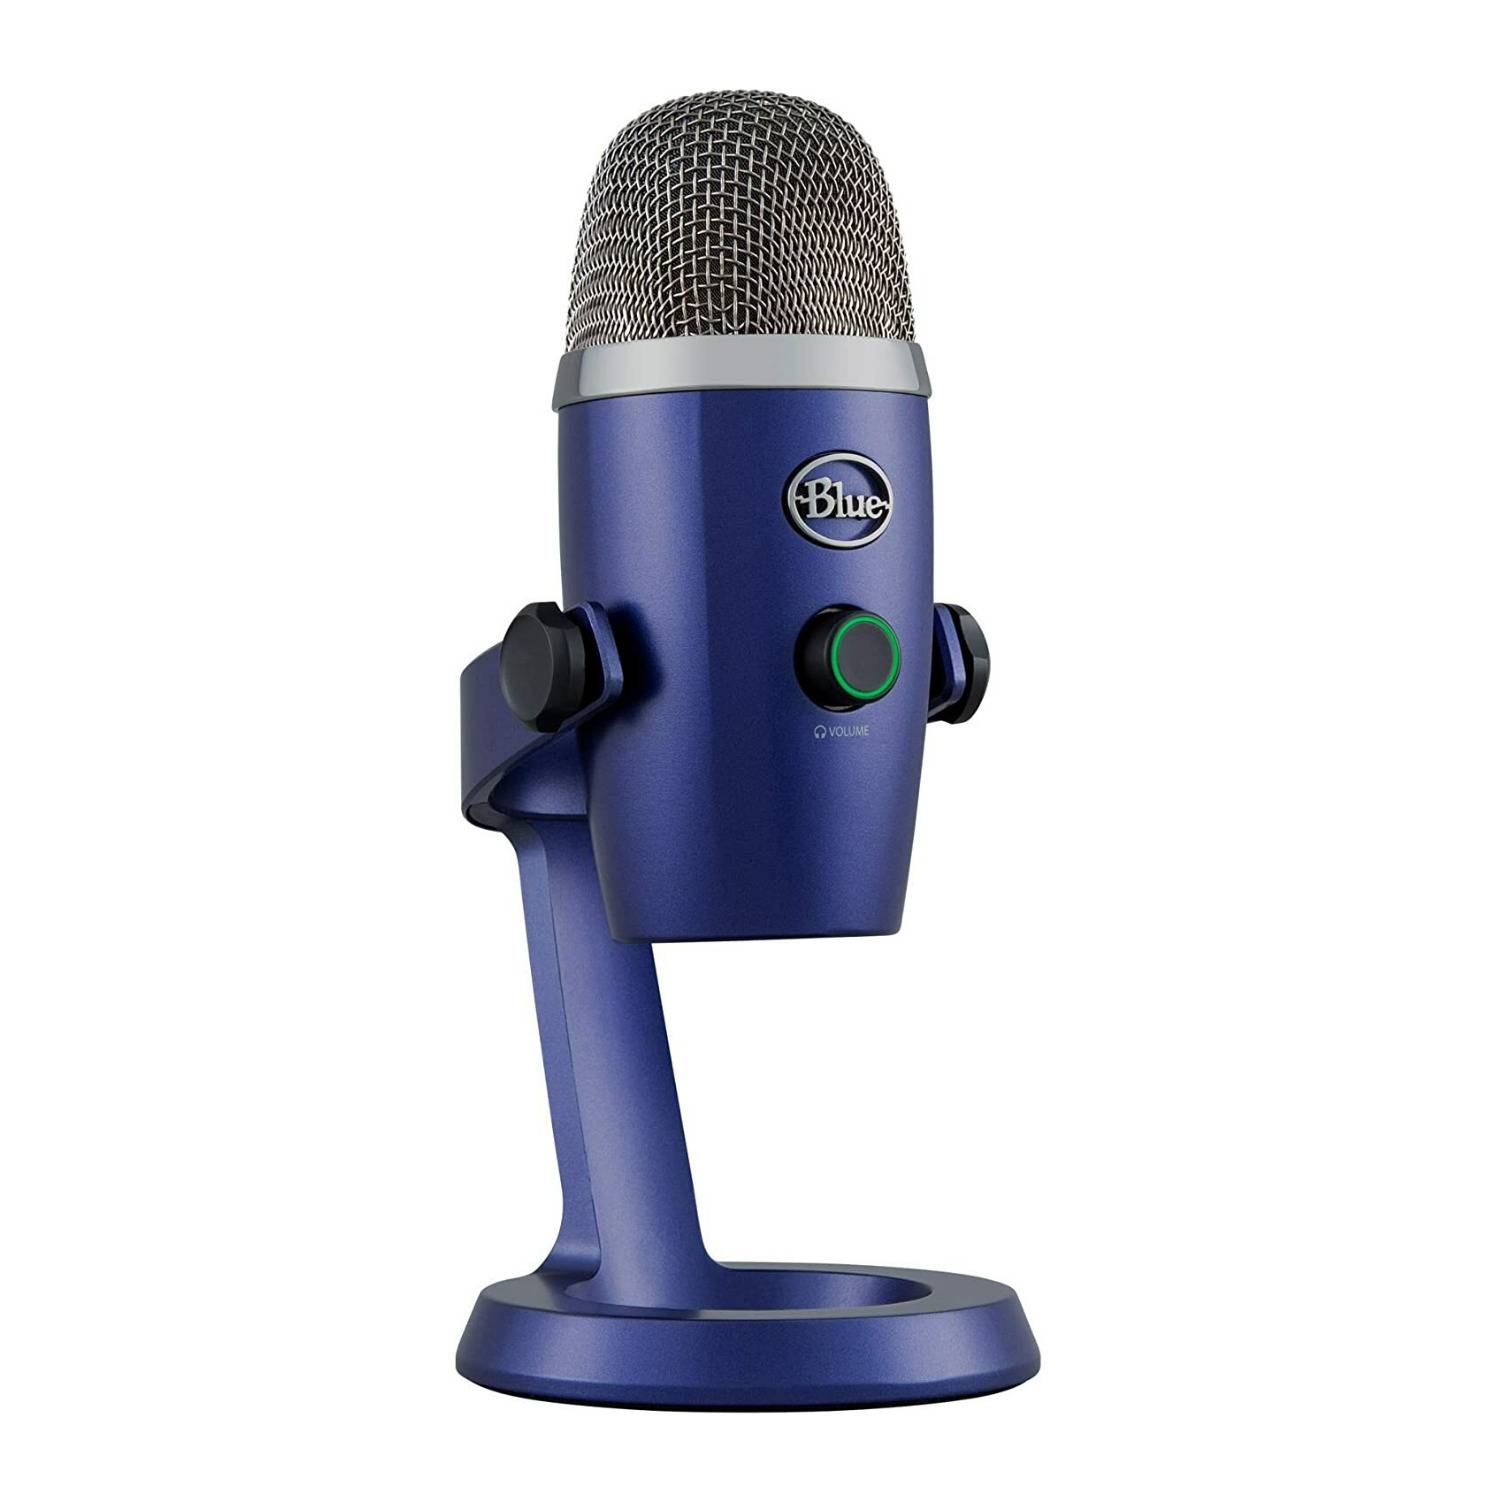 Blue Yeti Nano Premium USB Microphone with Blue Voice Effects (Vivid Blue)